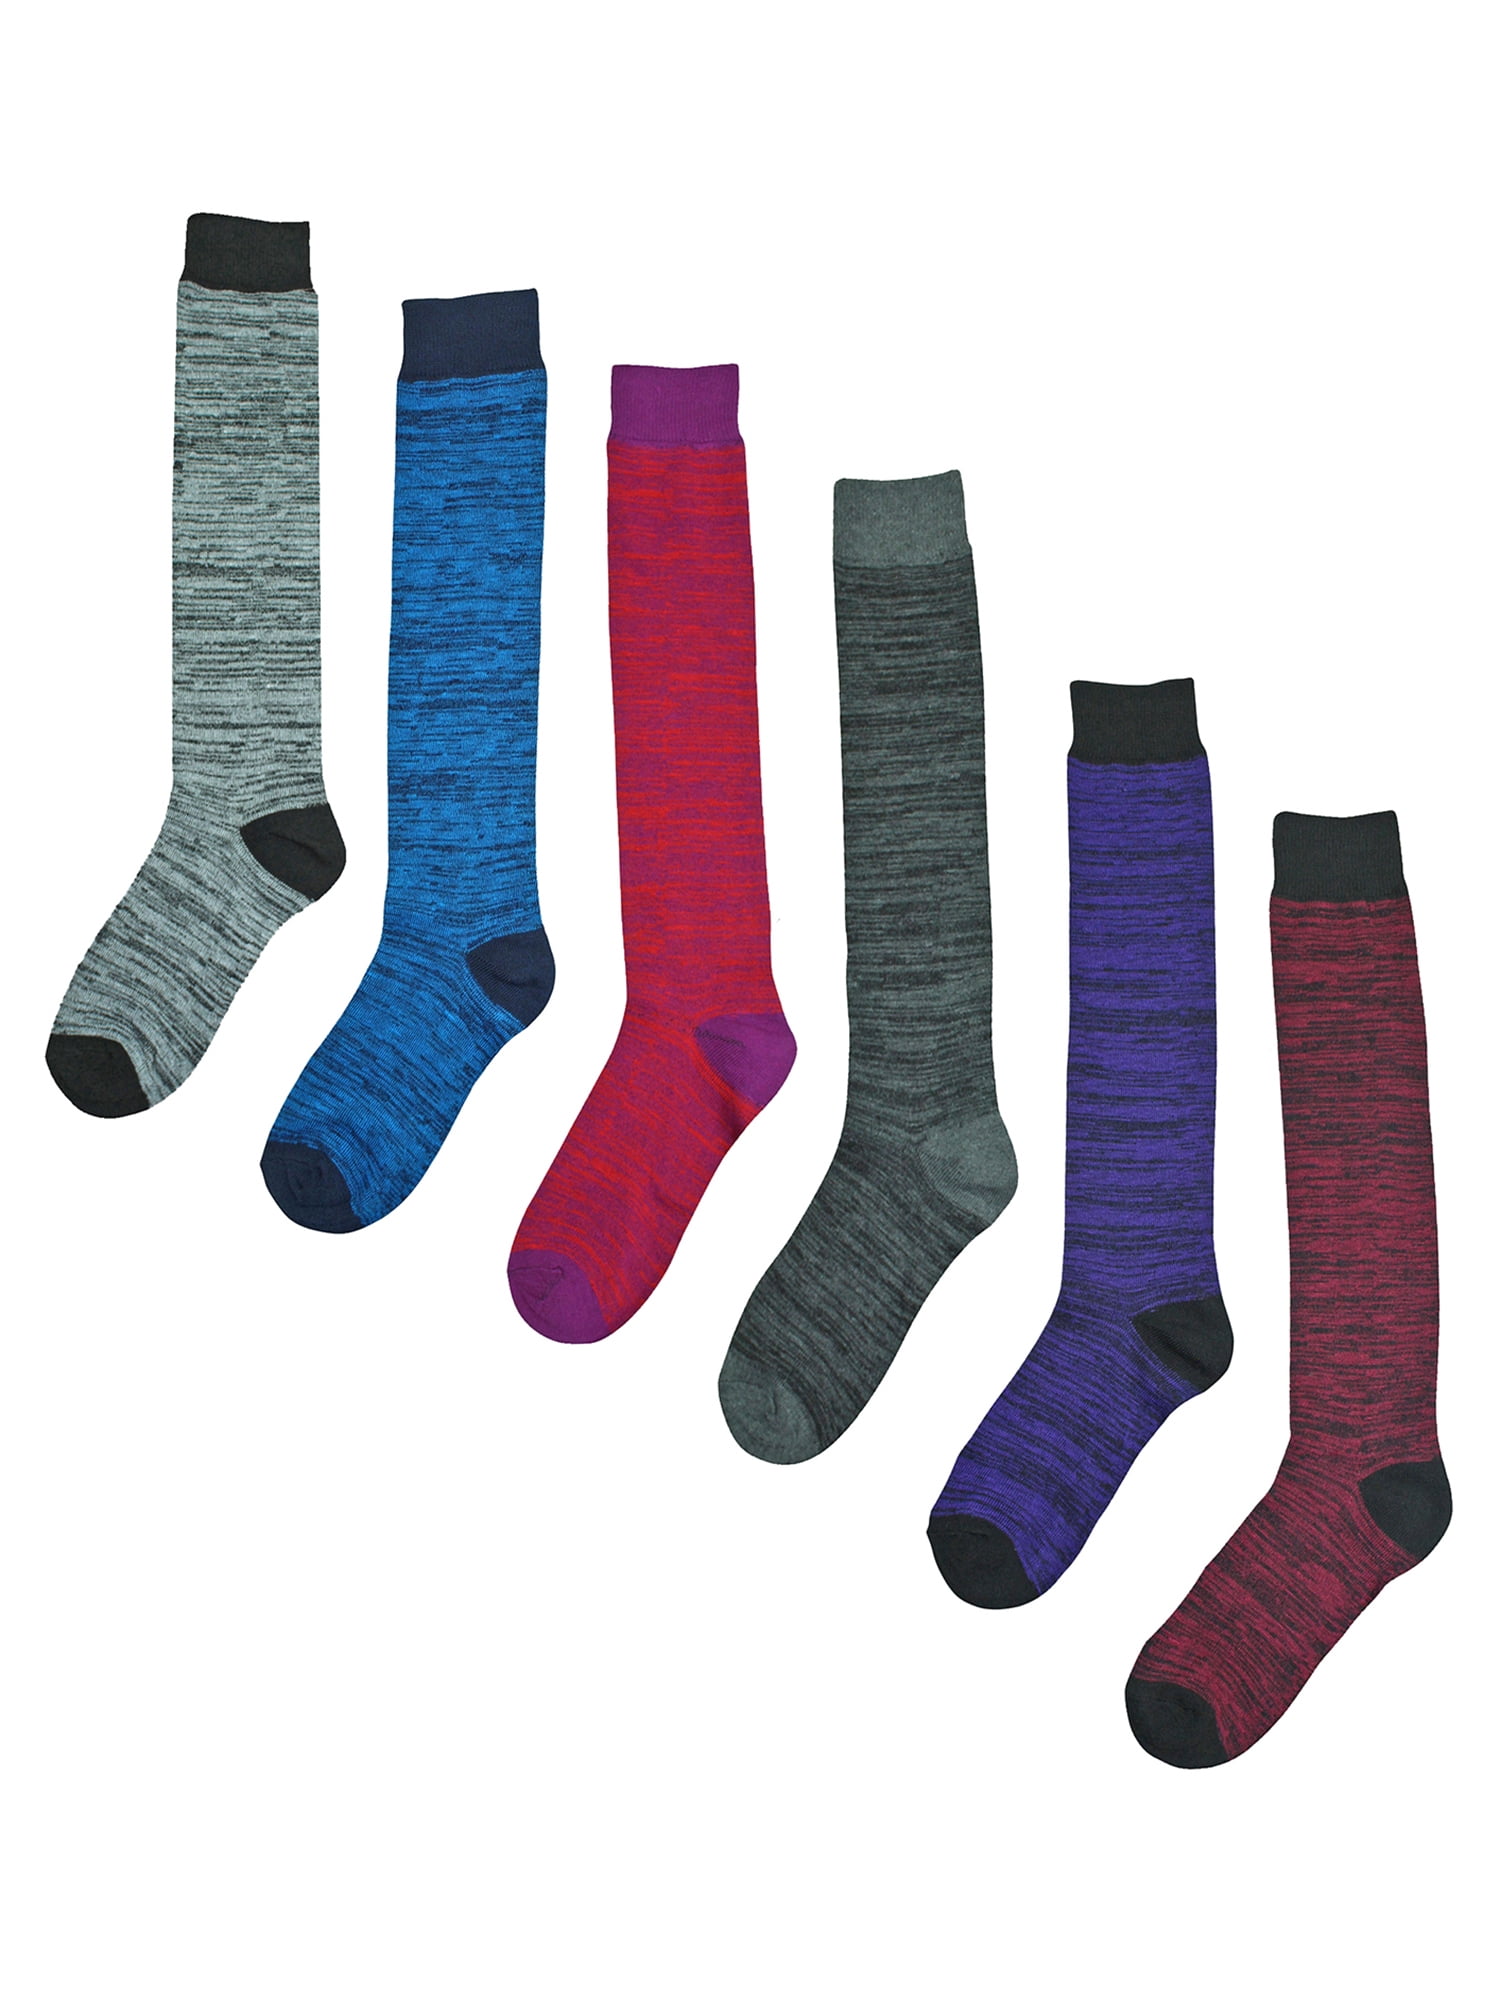 Marled Knit 6 Pack Assorted Knee High Socks For Women - Walmart.com